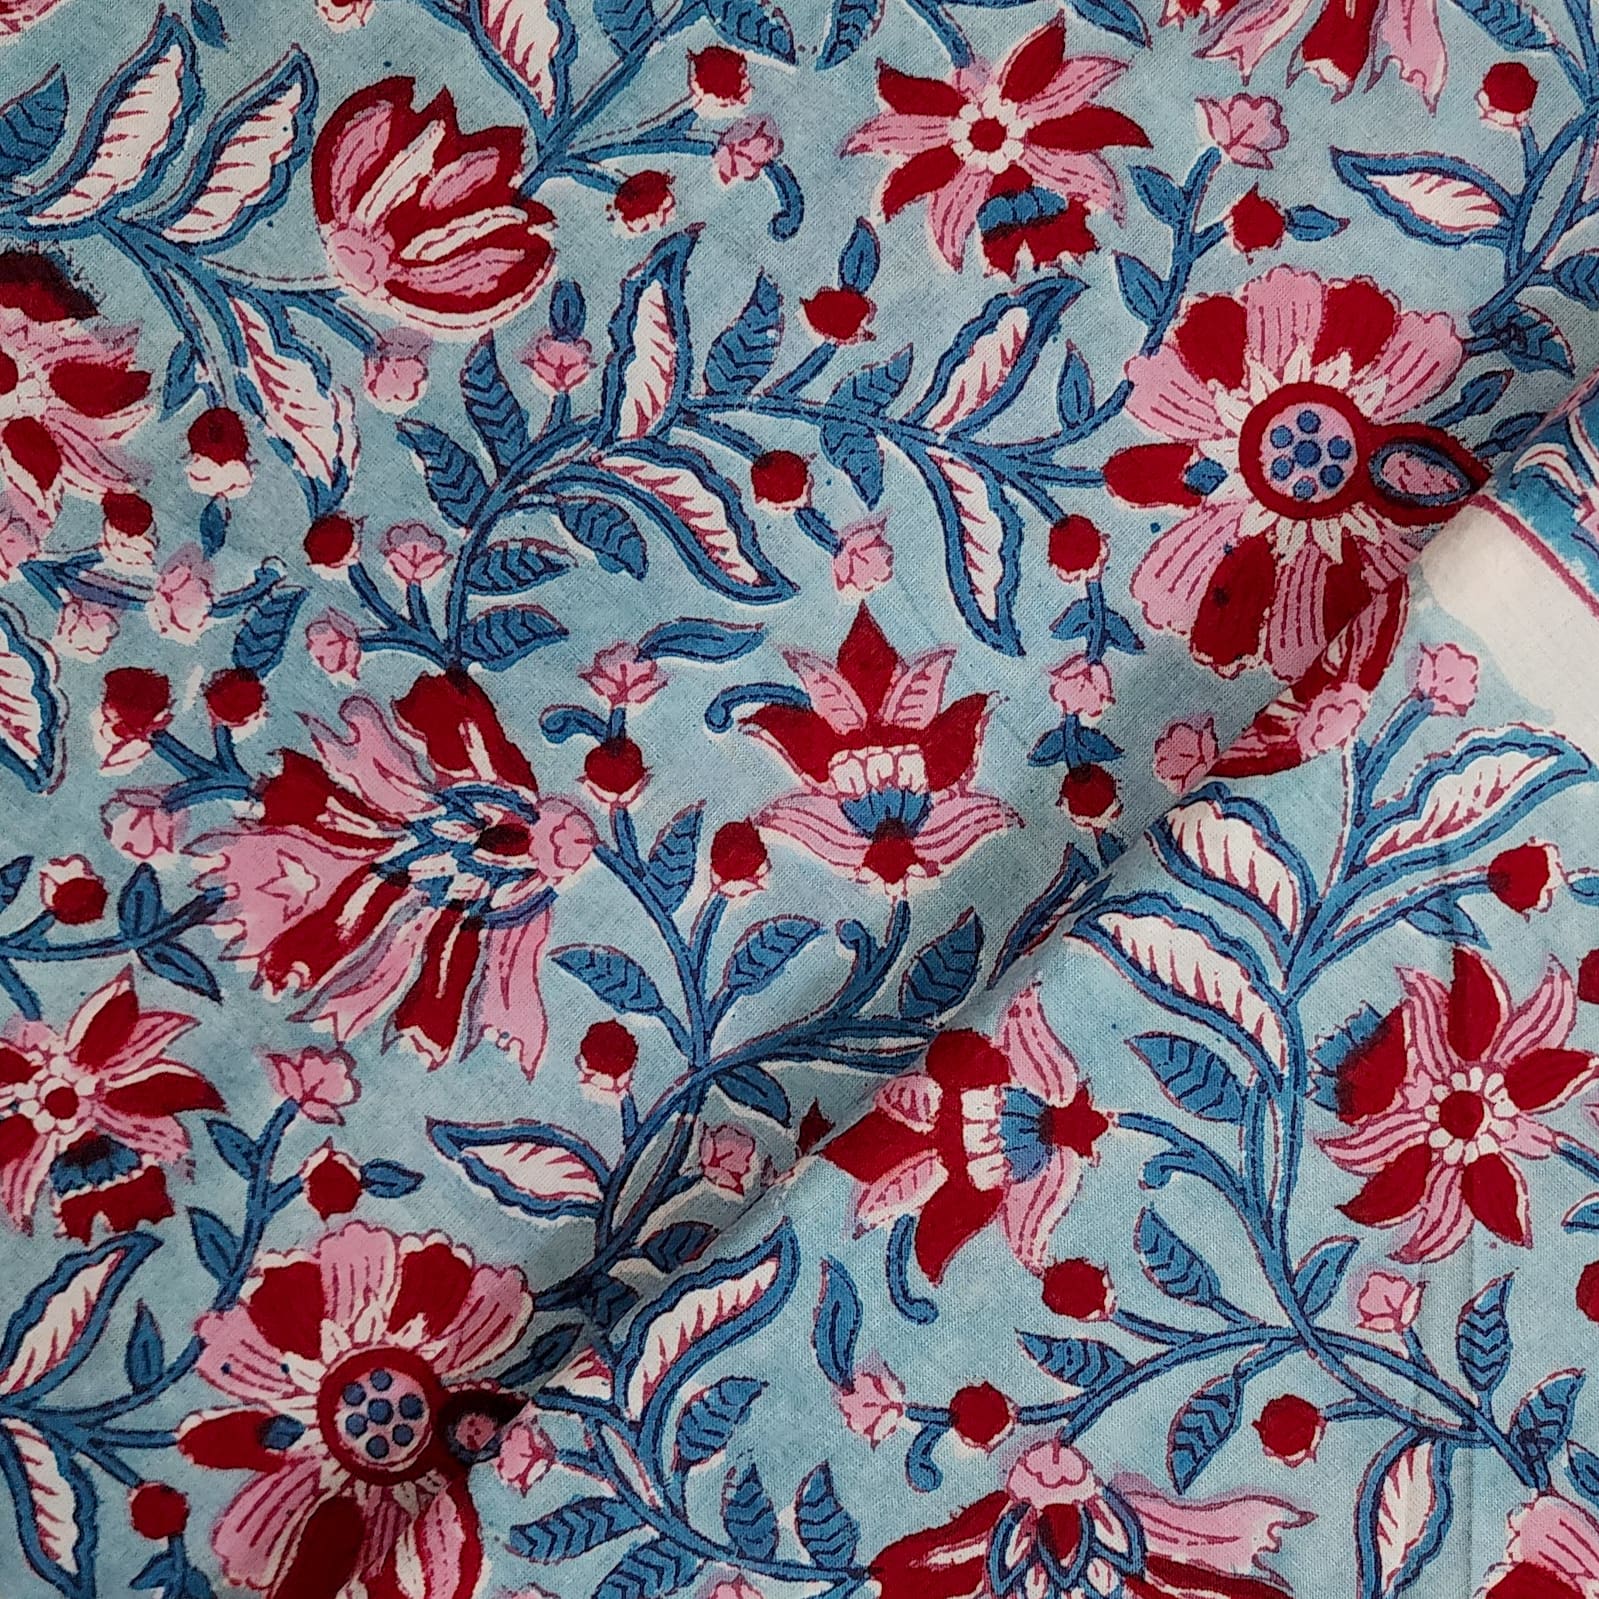 Printed Floral Print Rayon Fabric, Packaging Type: Than at Rs 68/meter in  Jaipur